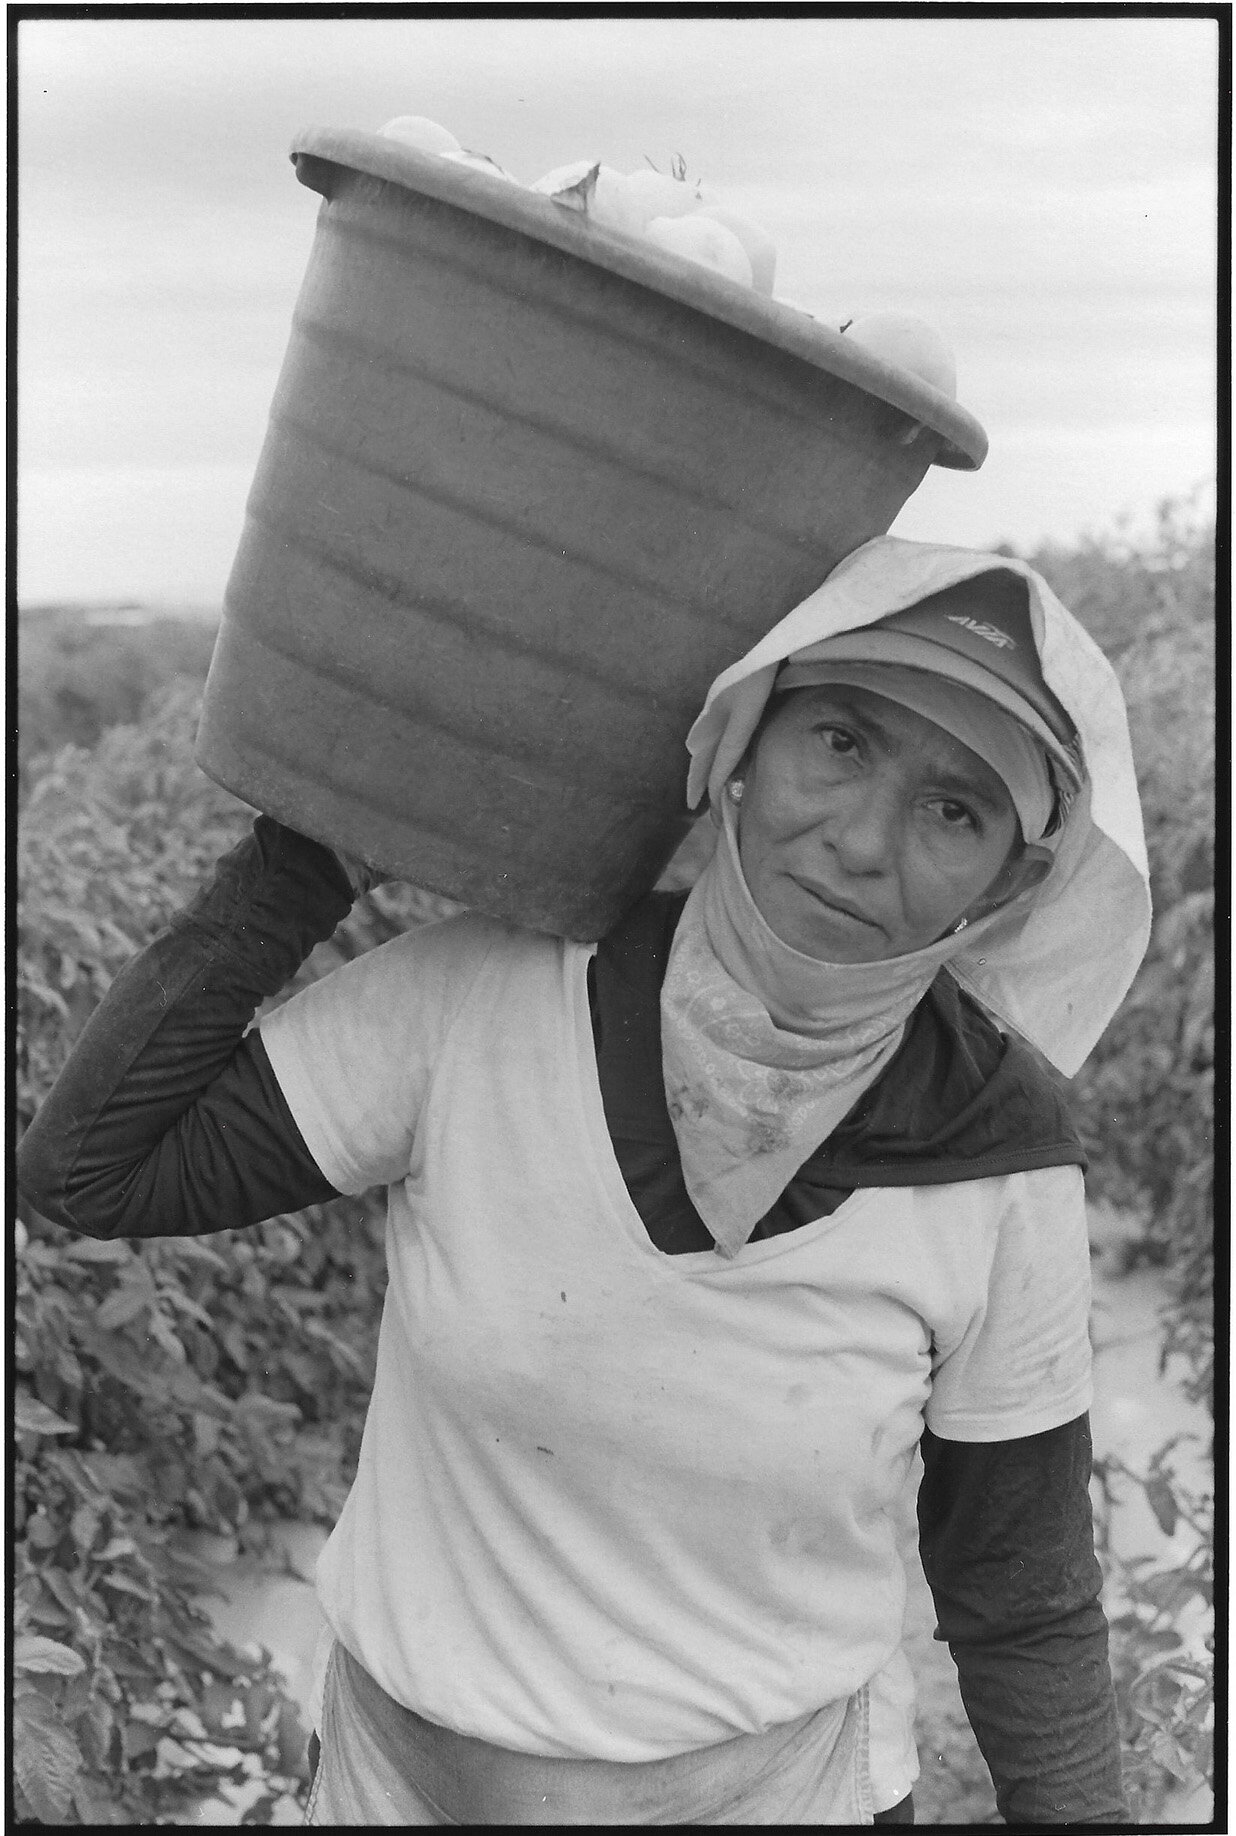   Farmworker Harvesting Tomatoes, Gadsden County, FL,  2019 Gelatin silver print 8 x 5 1/2 (image size) The Do Good Fund, Inc., 2020-044 